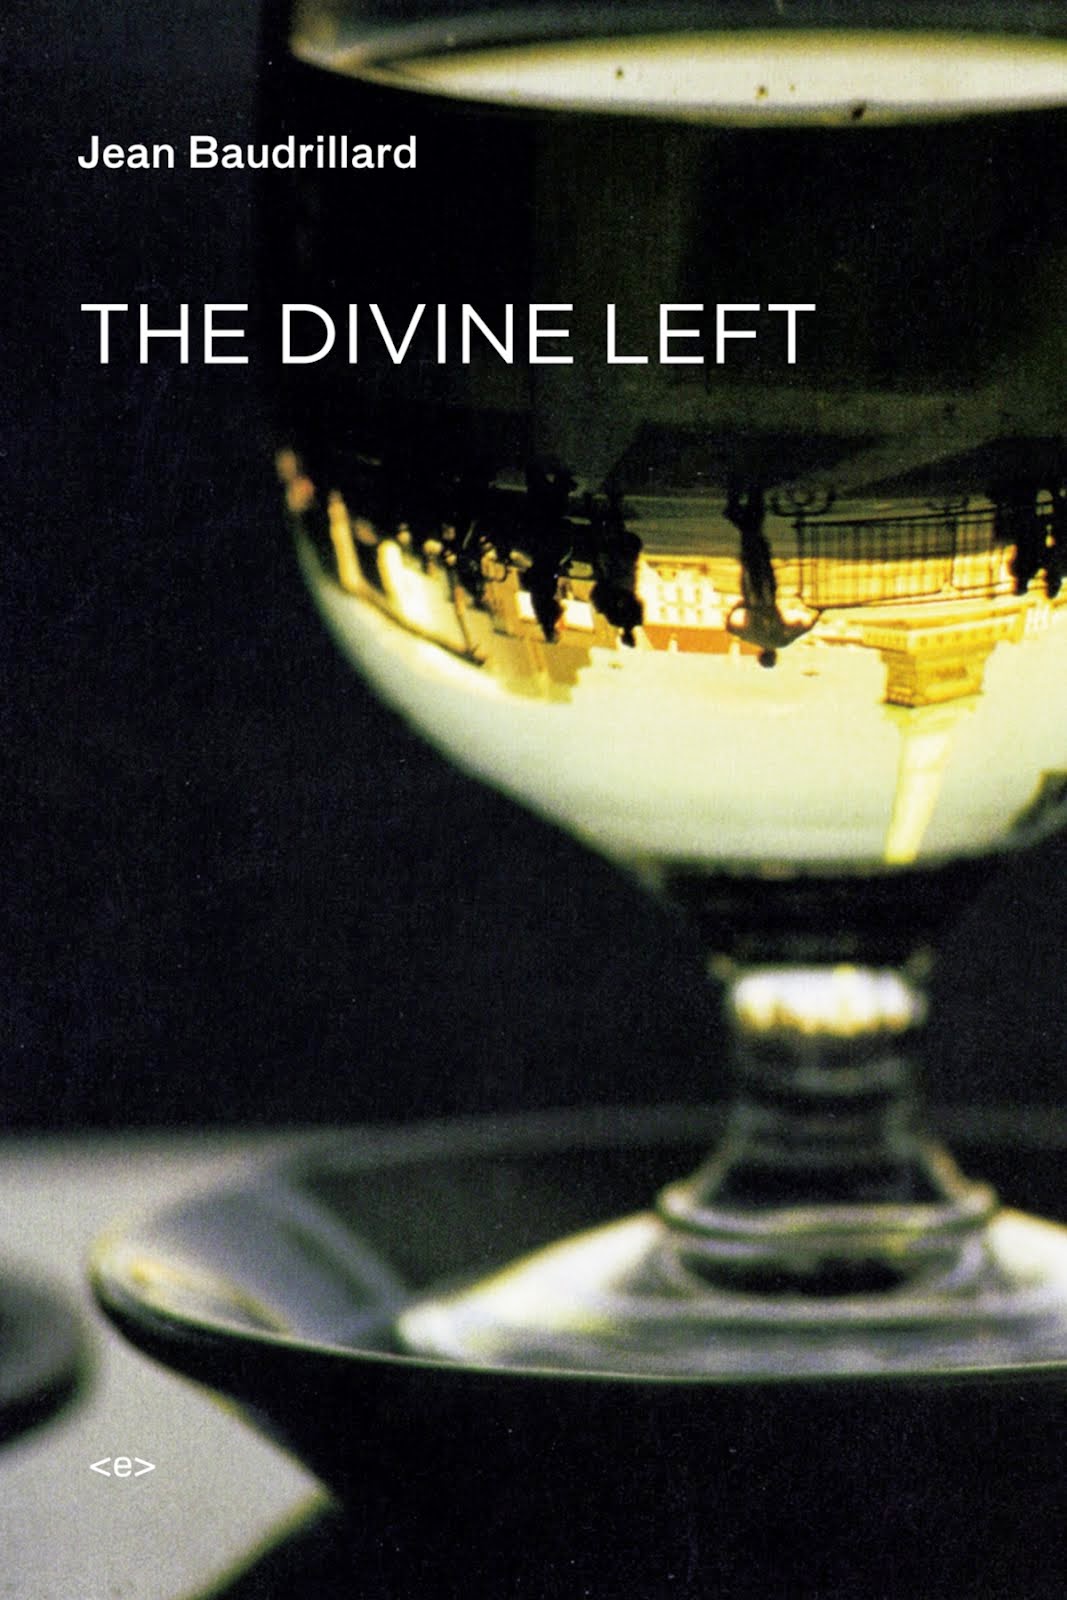 "The Divine Left" by Jean Baudrillard